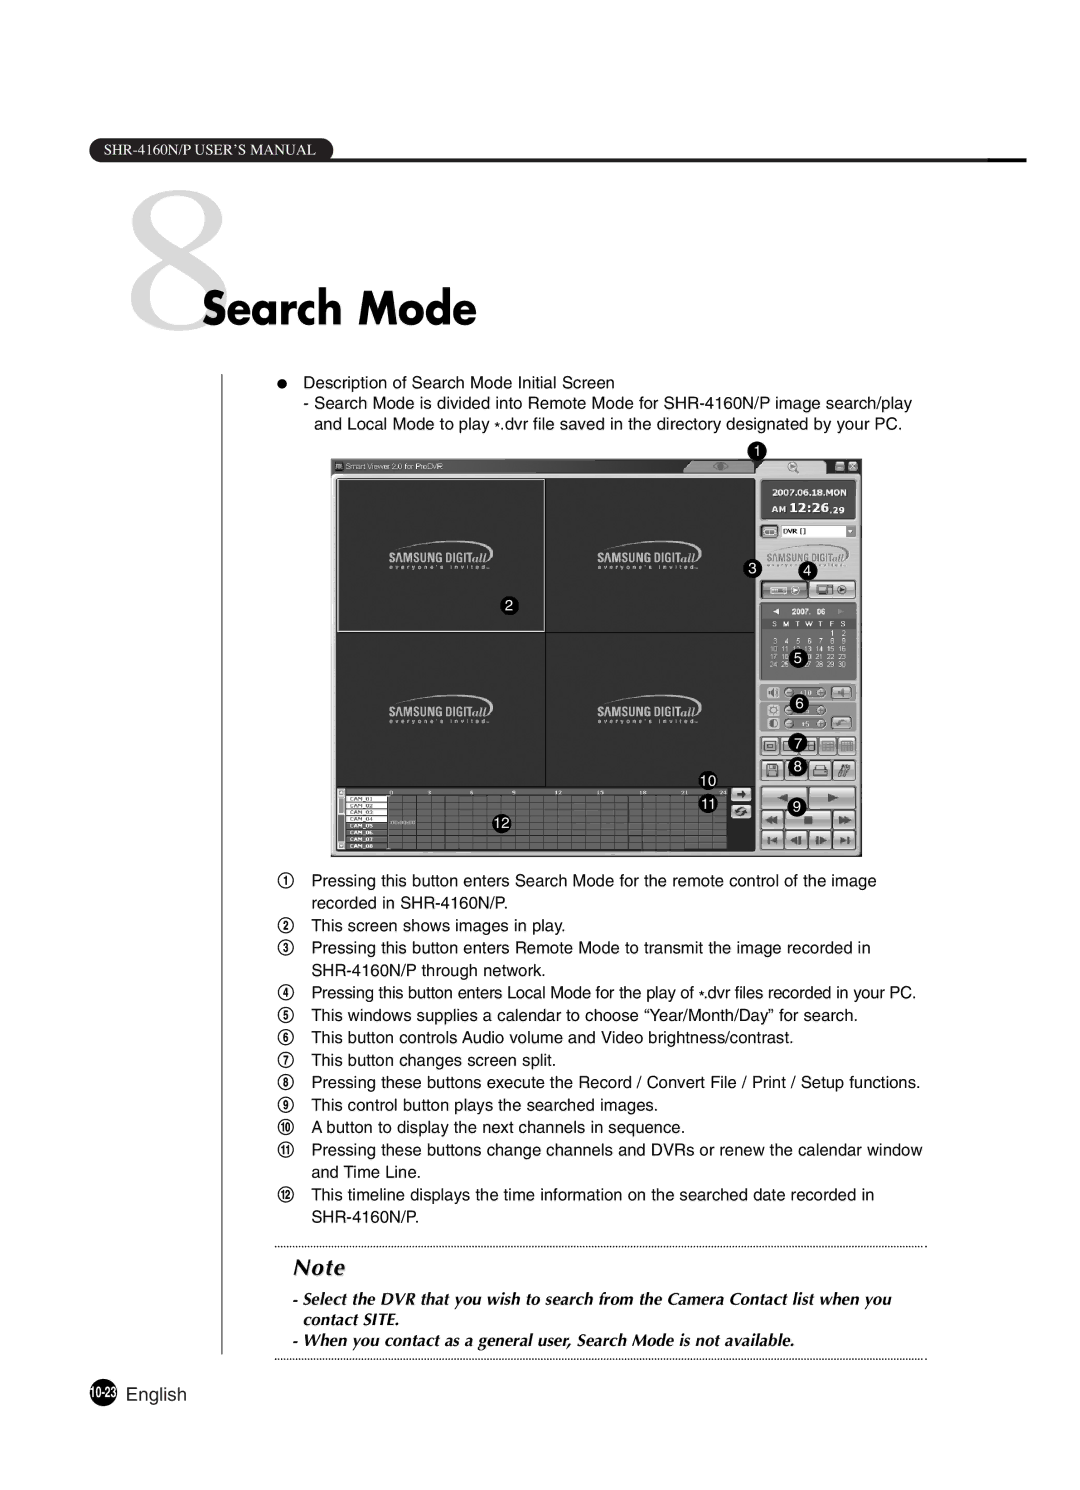 Samsung SHR-4160P manual 8Search Mode, 10-23English 